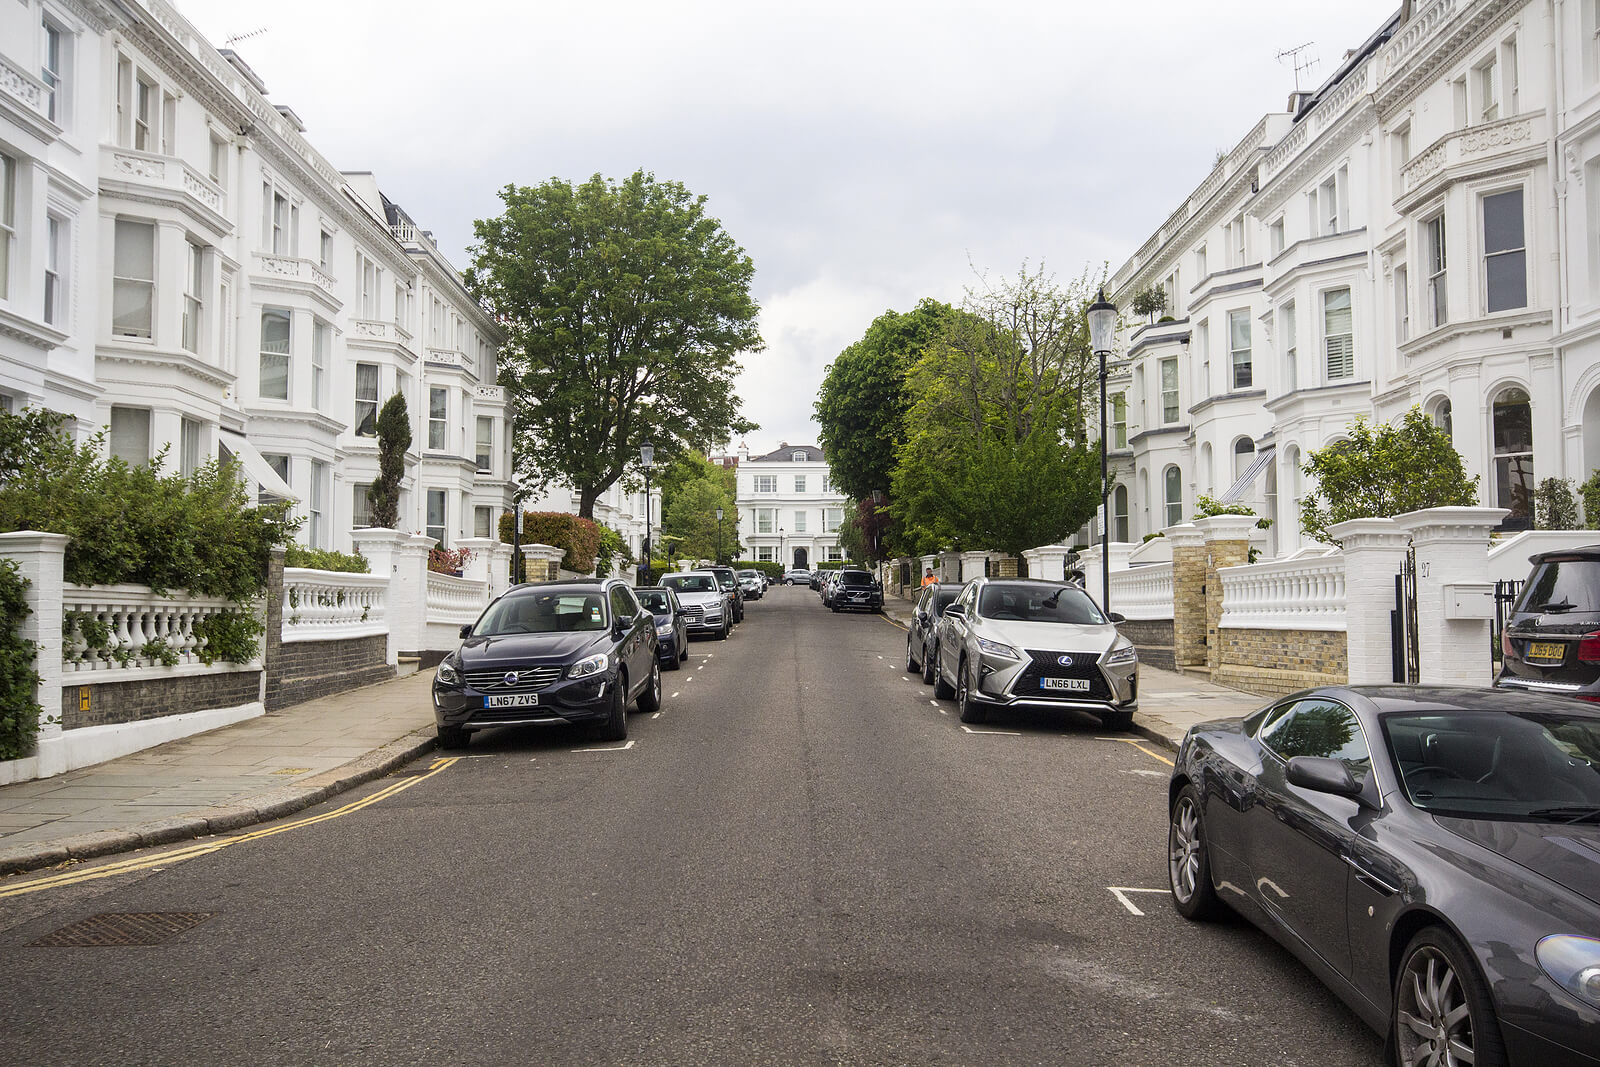 A residential street in Kensington, London.